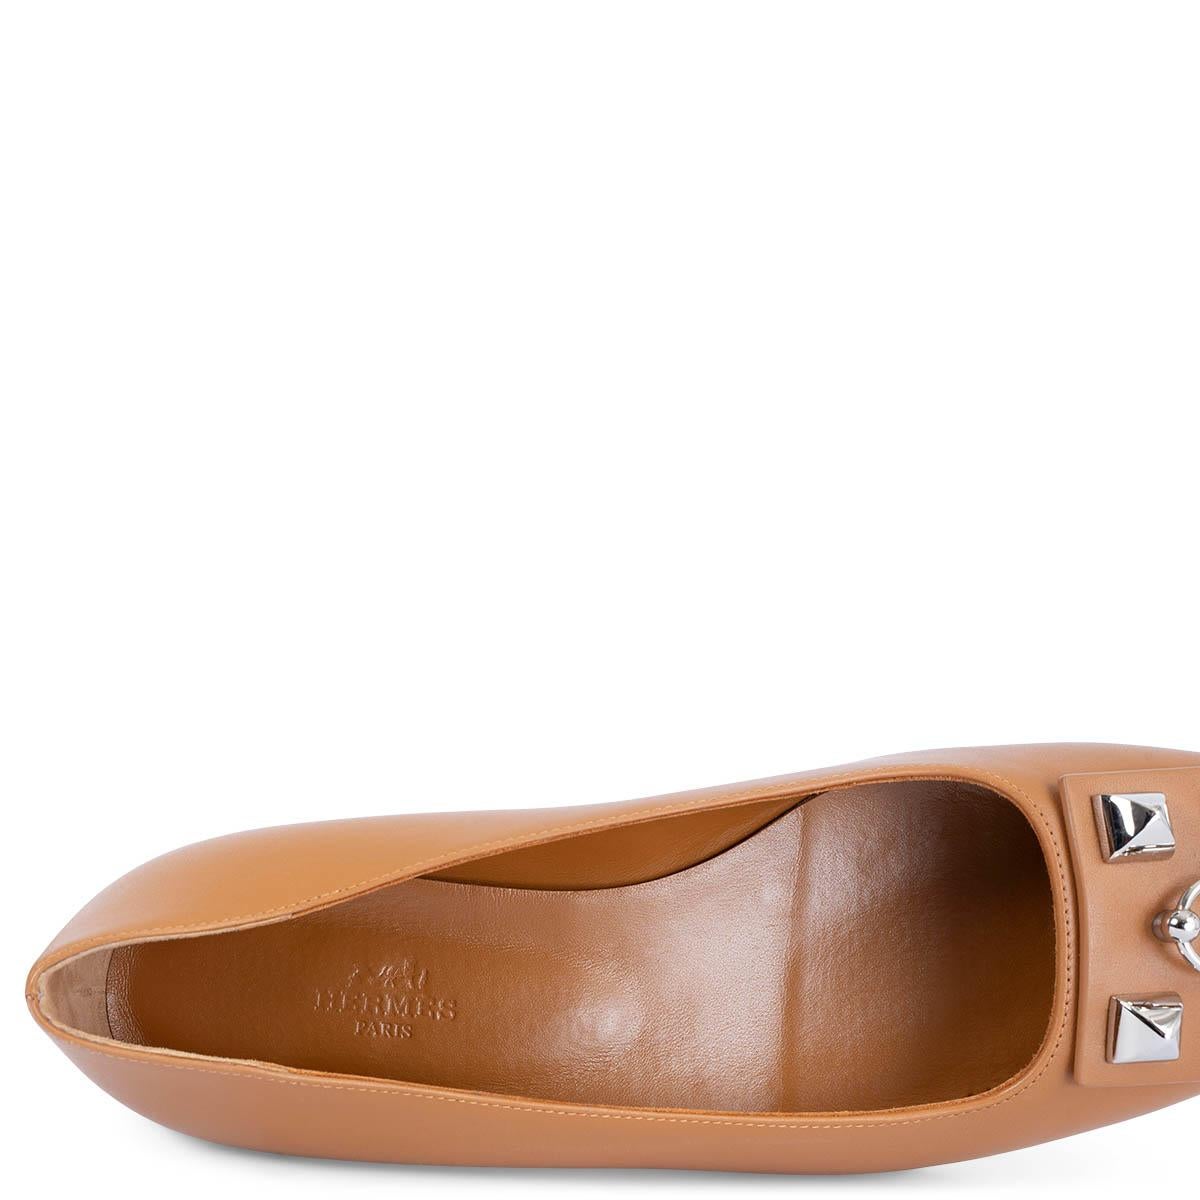 HERMES Gold brown leather DANSEUSE Ballet Flats Shoes 37.5 For Sale 2